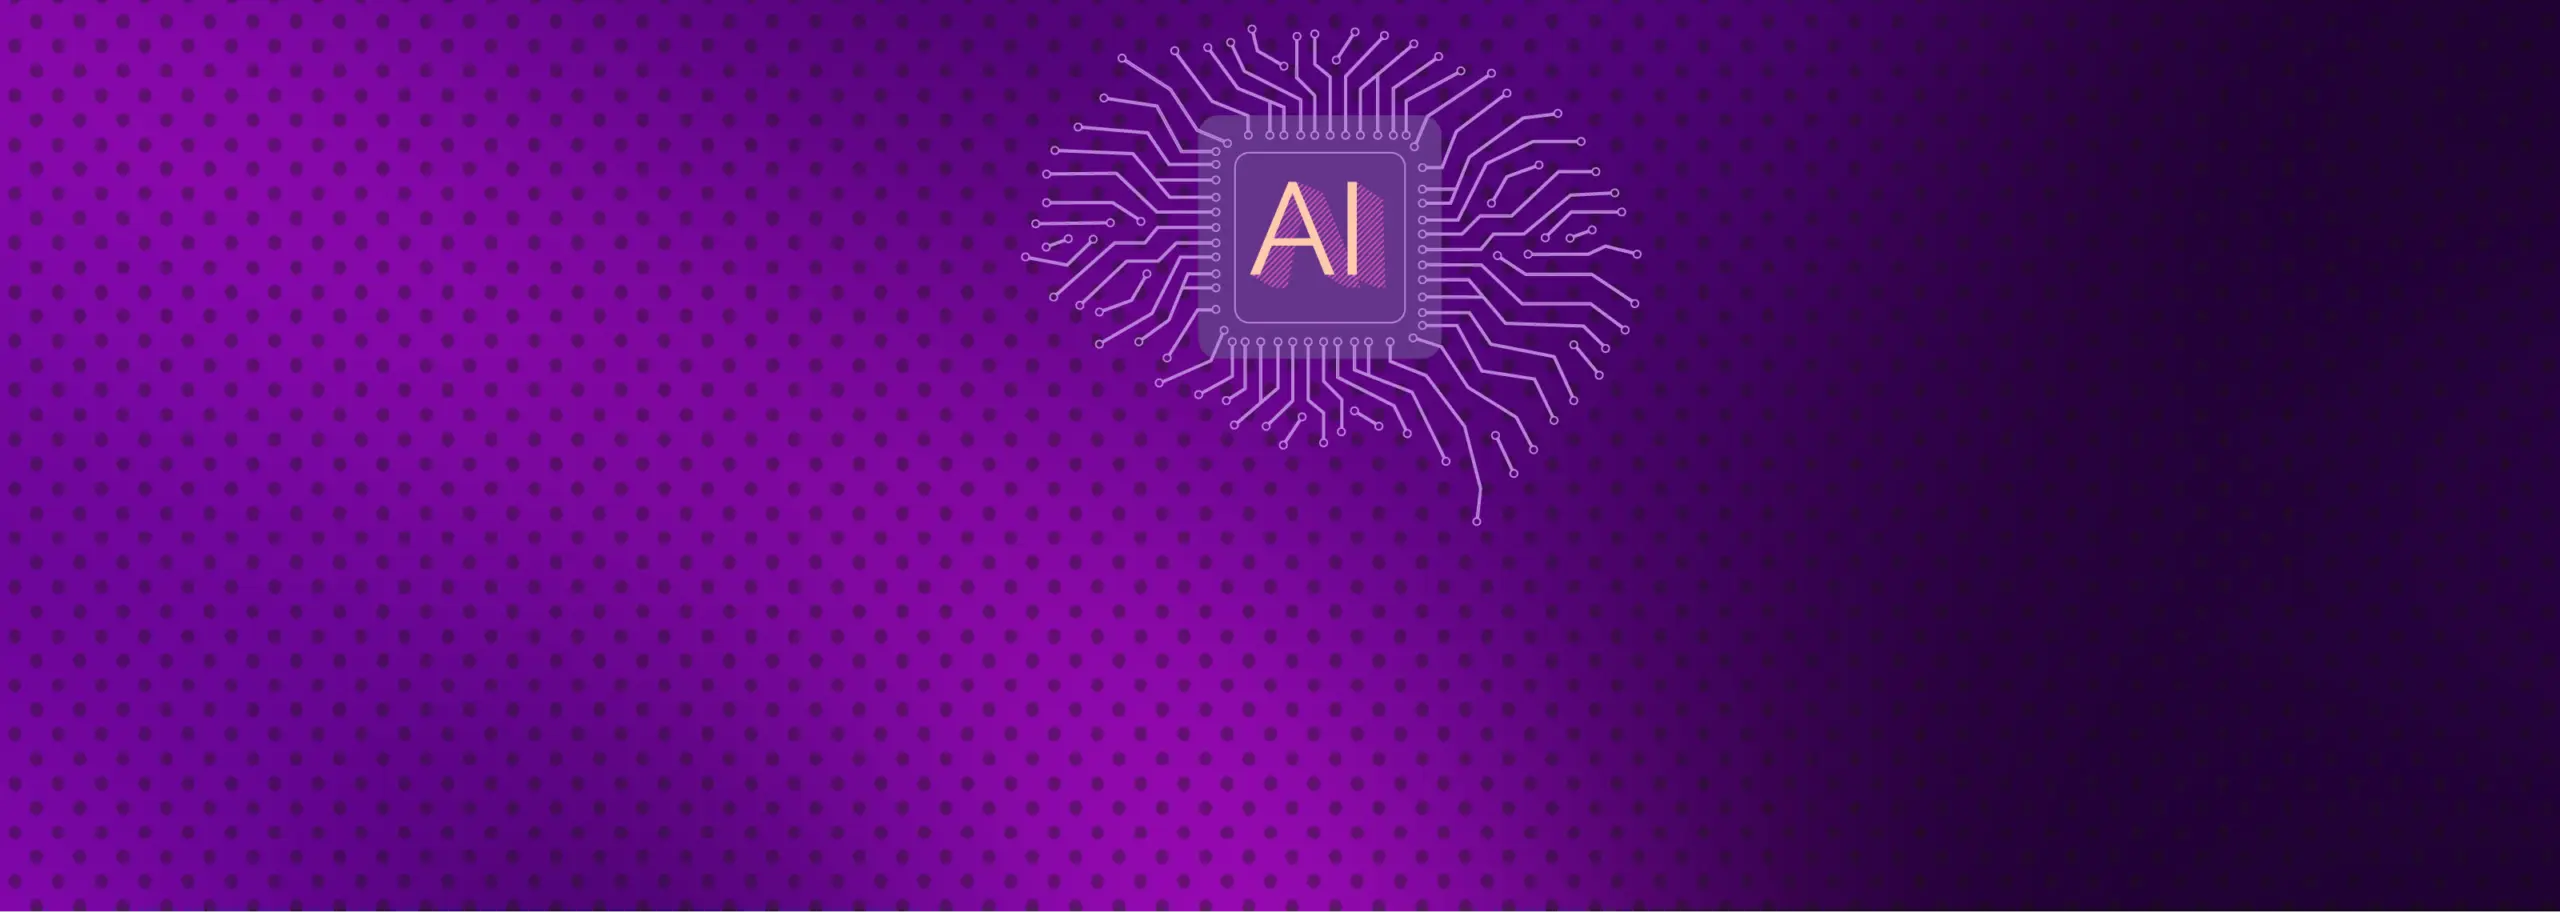 Purple illustration of neural AI network